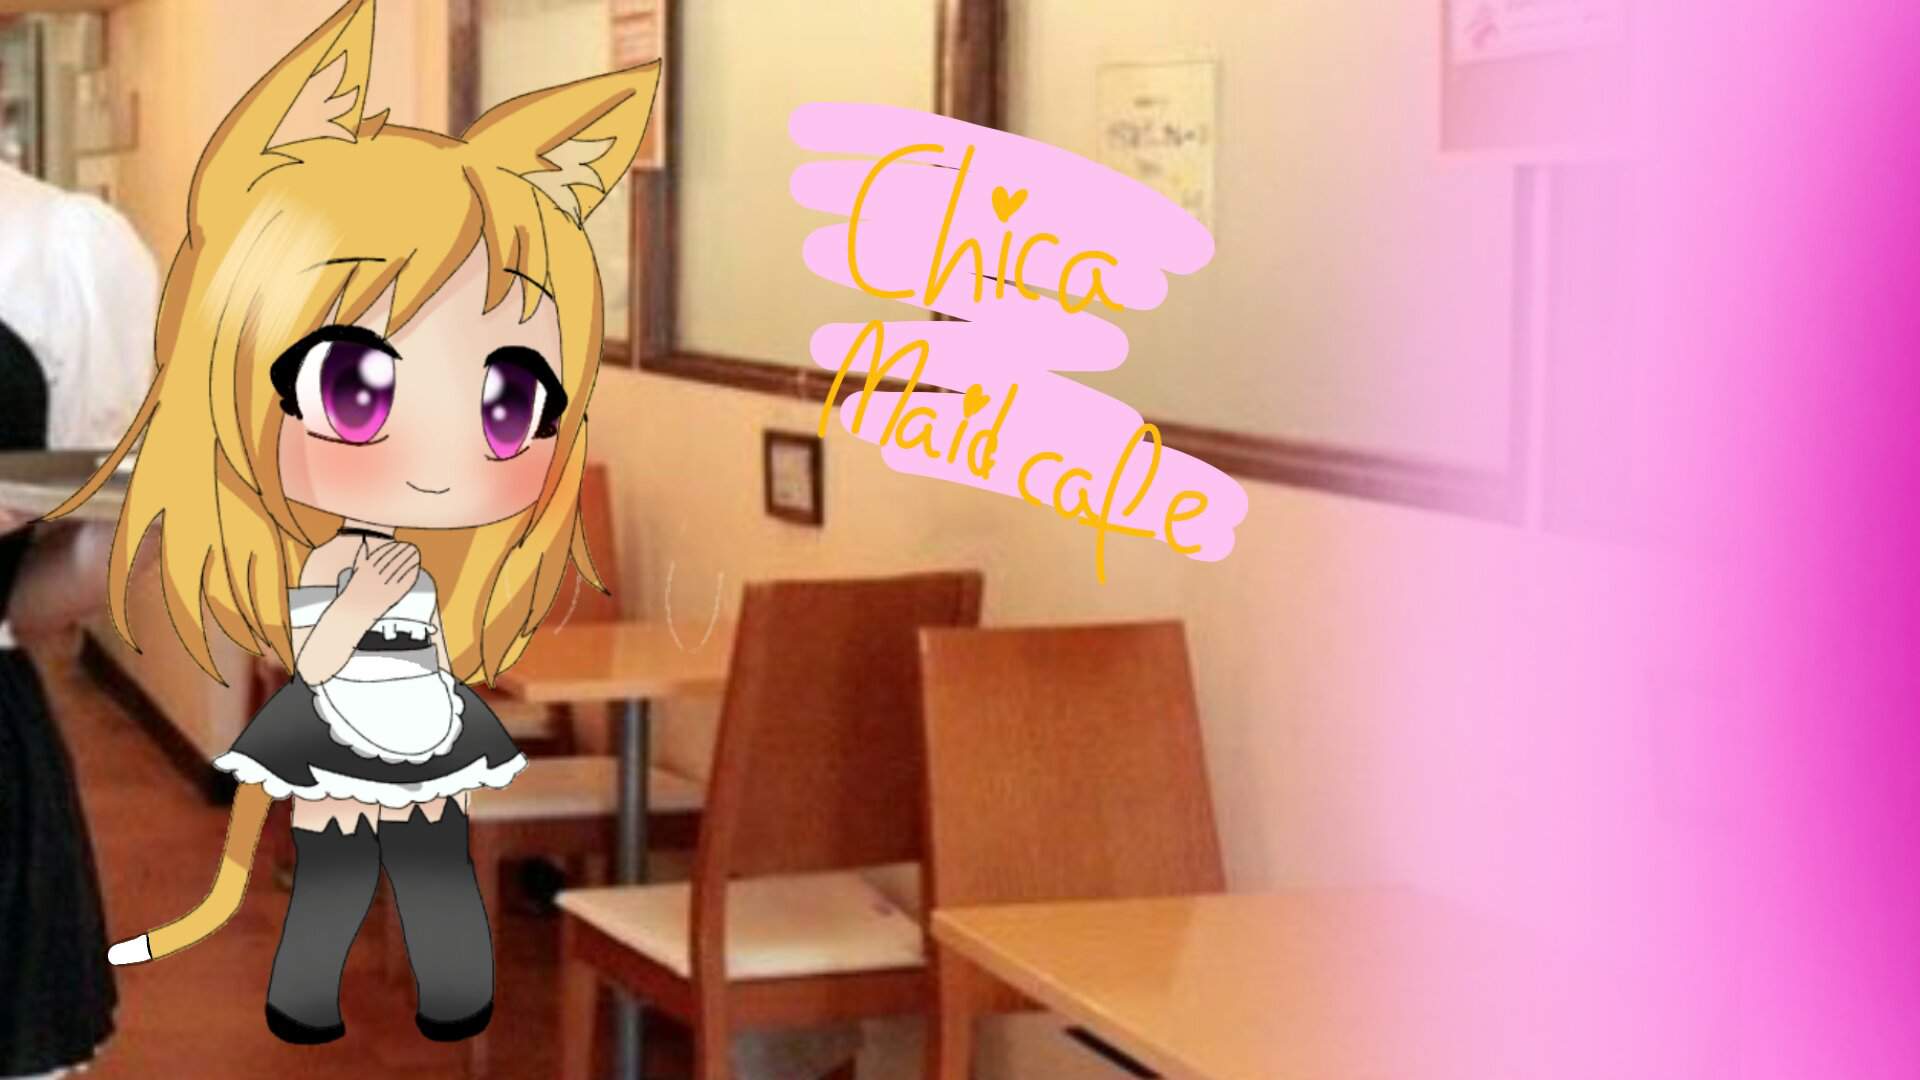 Chica maid cafe [Gacha Life]. Fnafhs English Version Amino